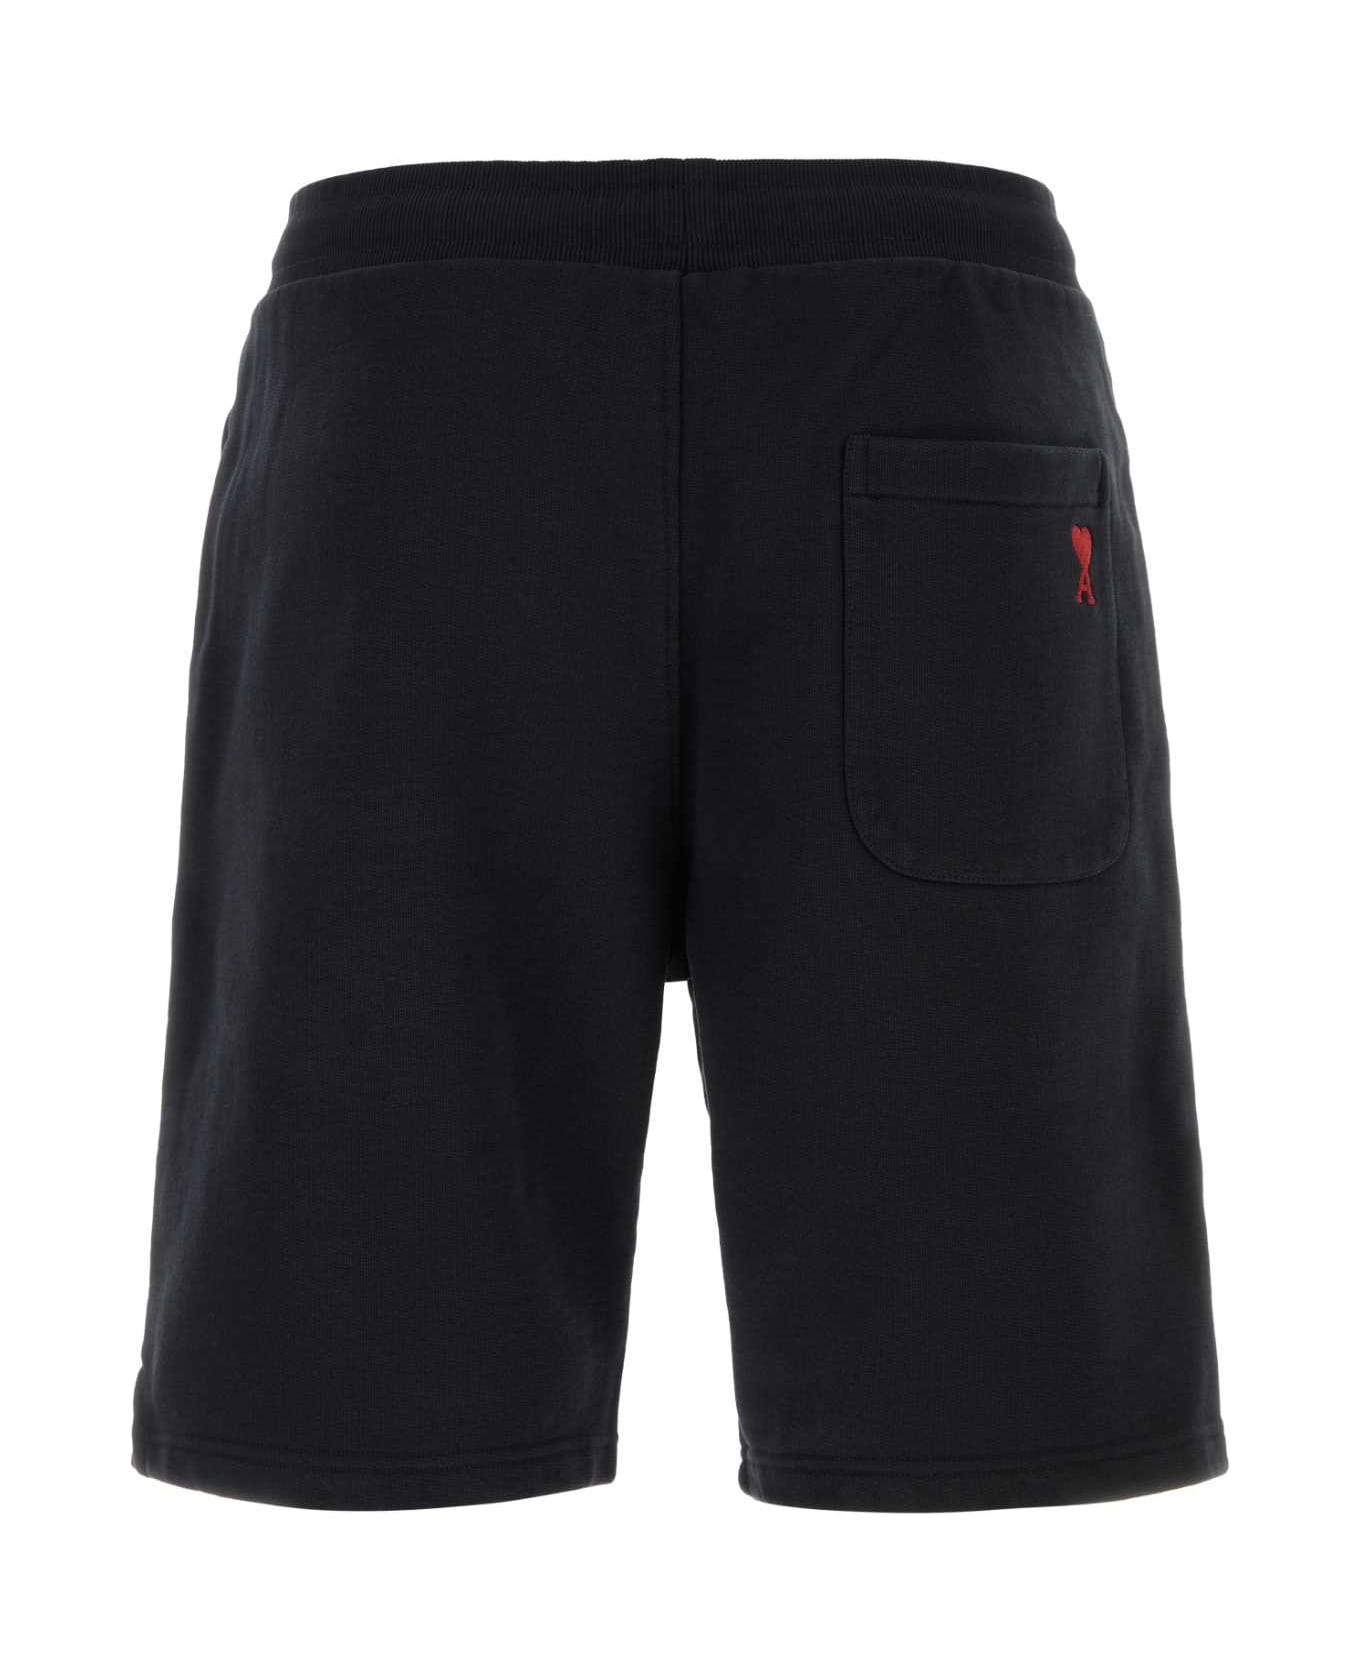 Ami Alexandre Mattiussi Black Stretch Cotton Bermuda Shorts - Black